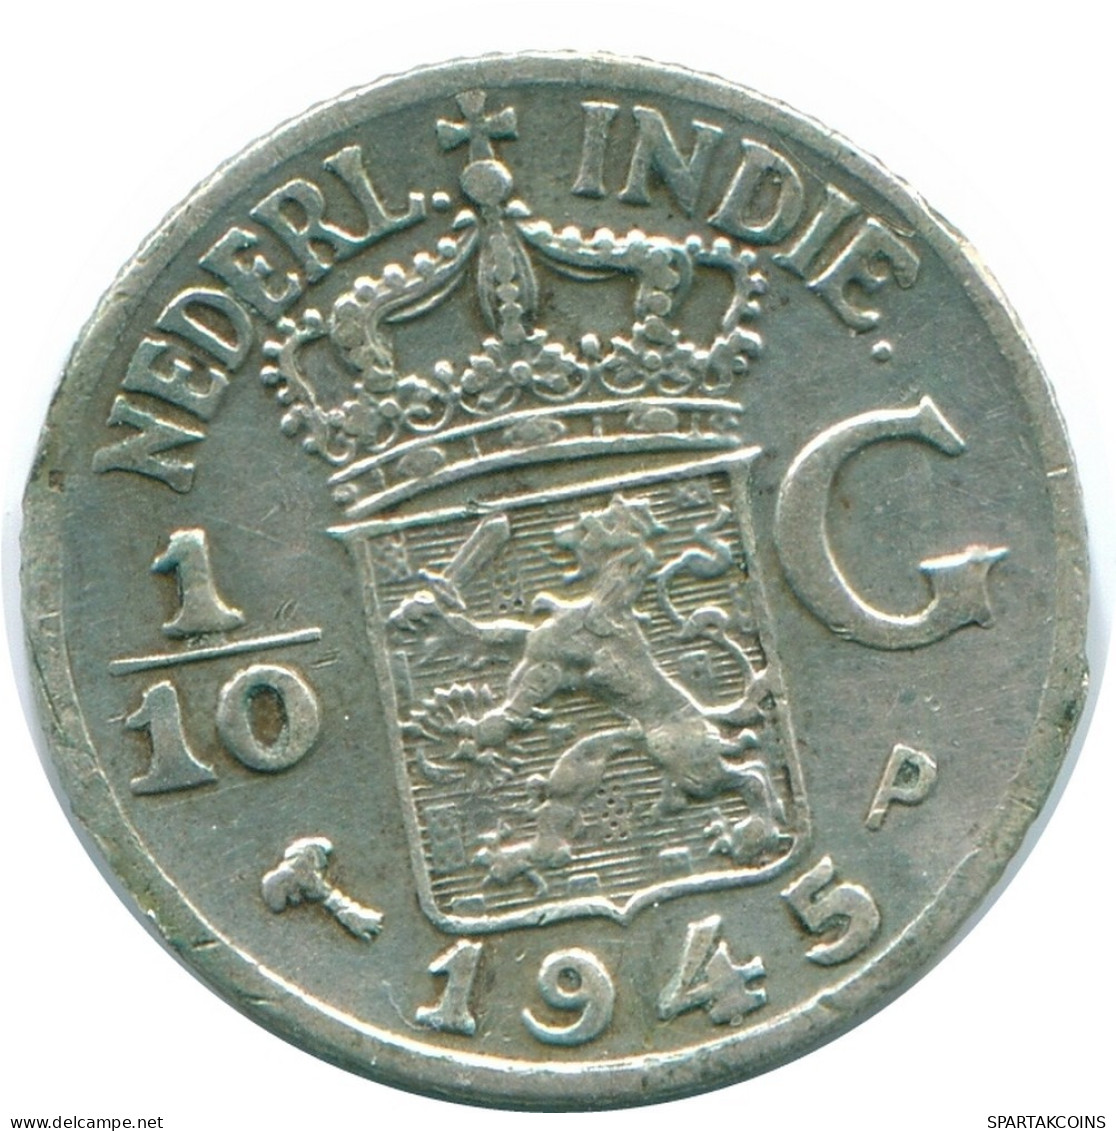 1/10 GULDEN 1945 P NETHERLANDS EAST INDIES SILVER Colonial Coin #NL14115.3.U.A - Indes Néerlandaises